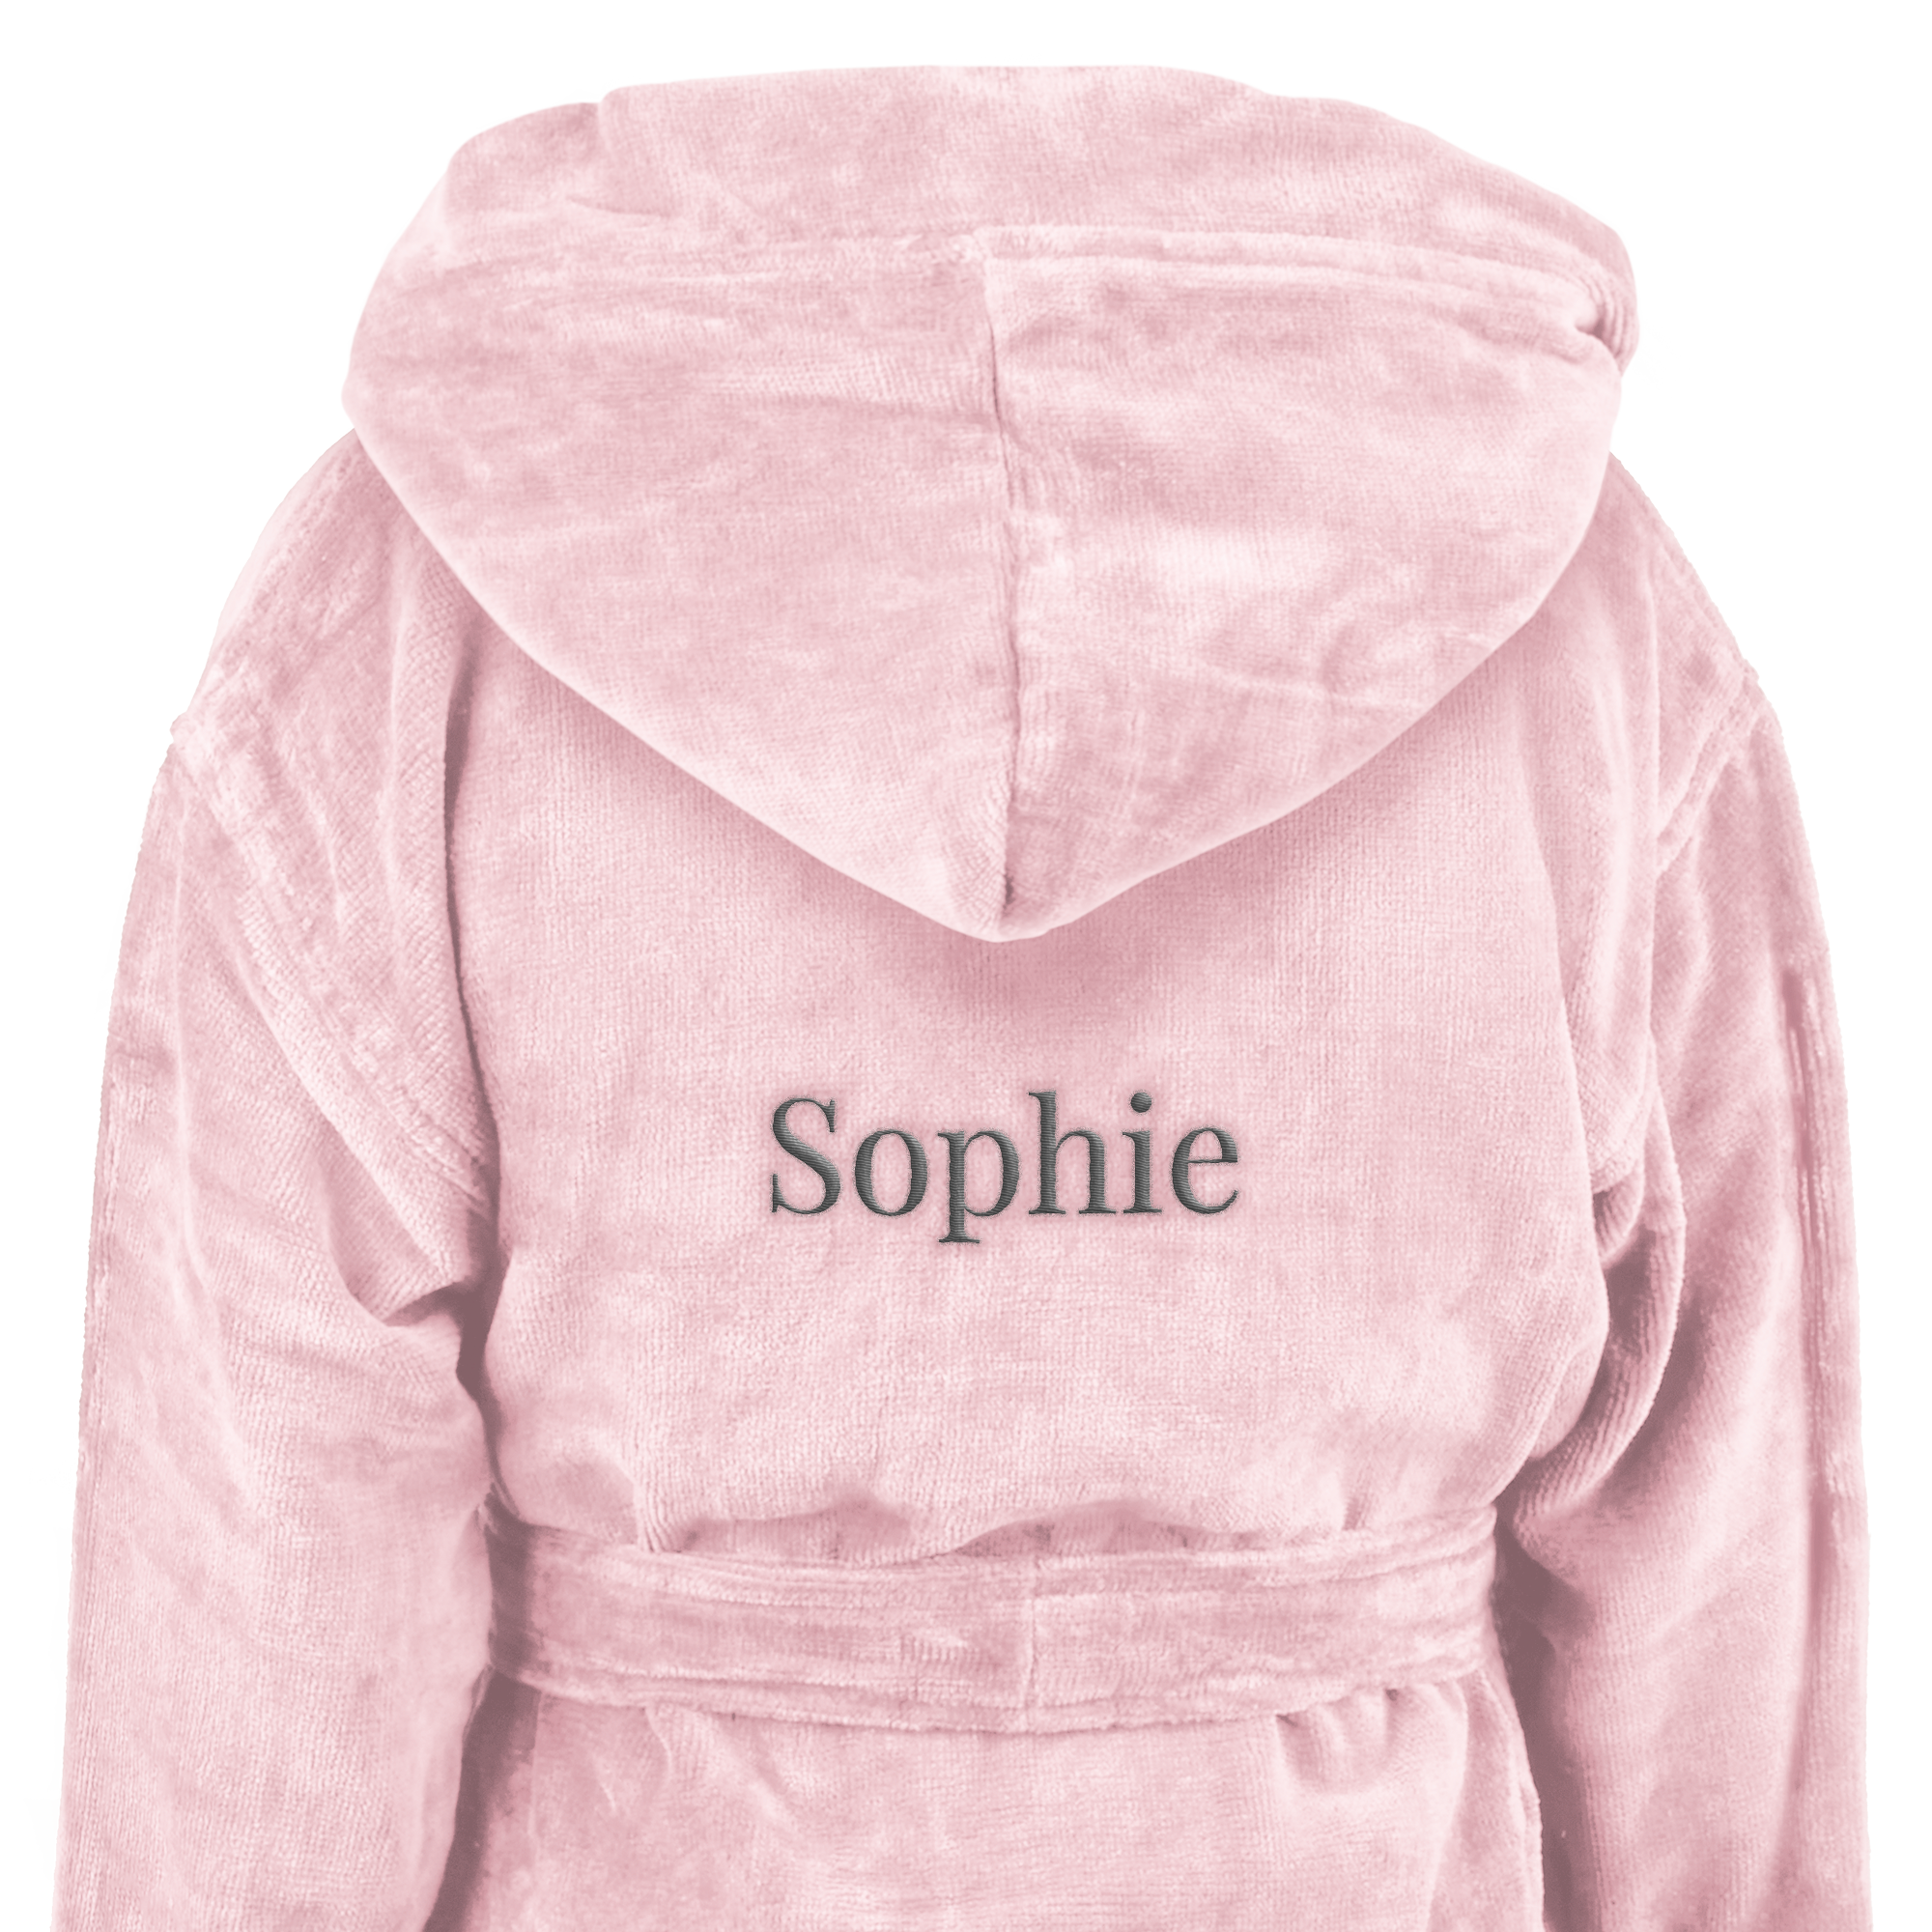 Personalised kids bathrobe - Pink - 2-4 yrs